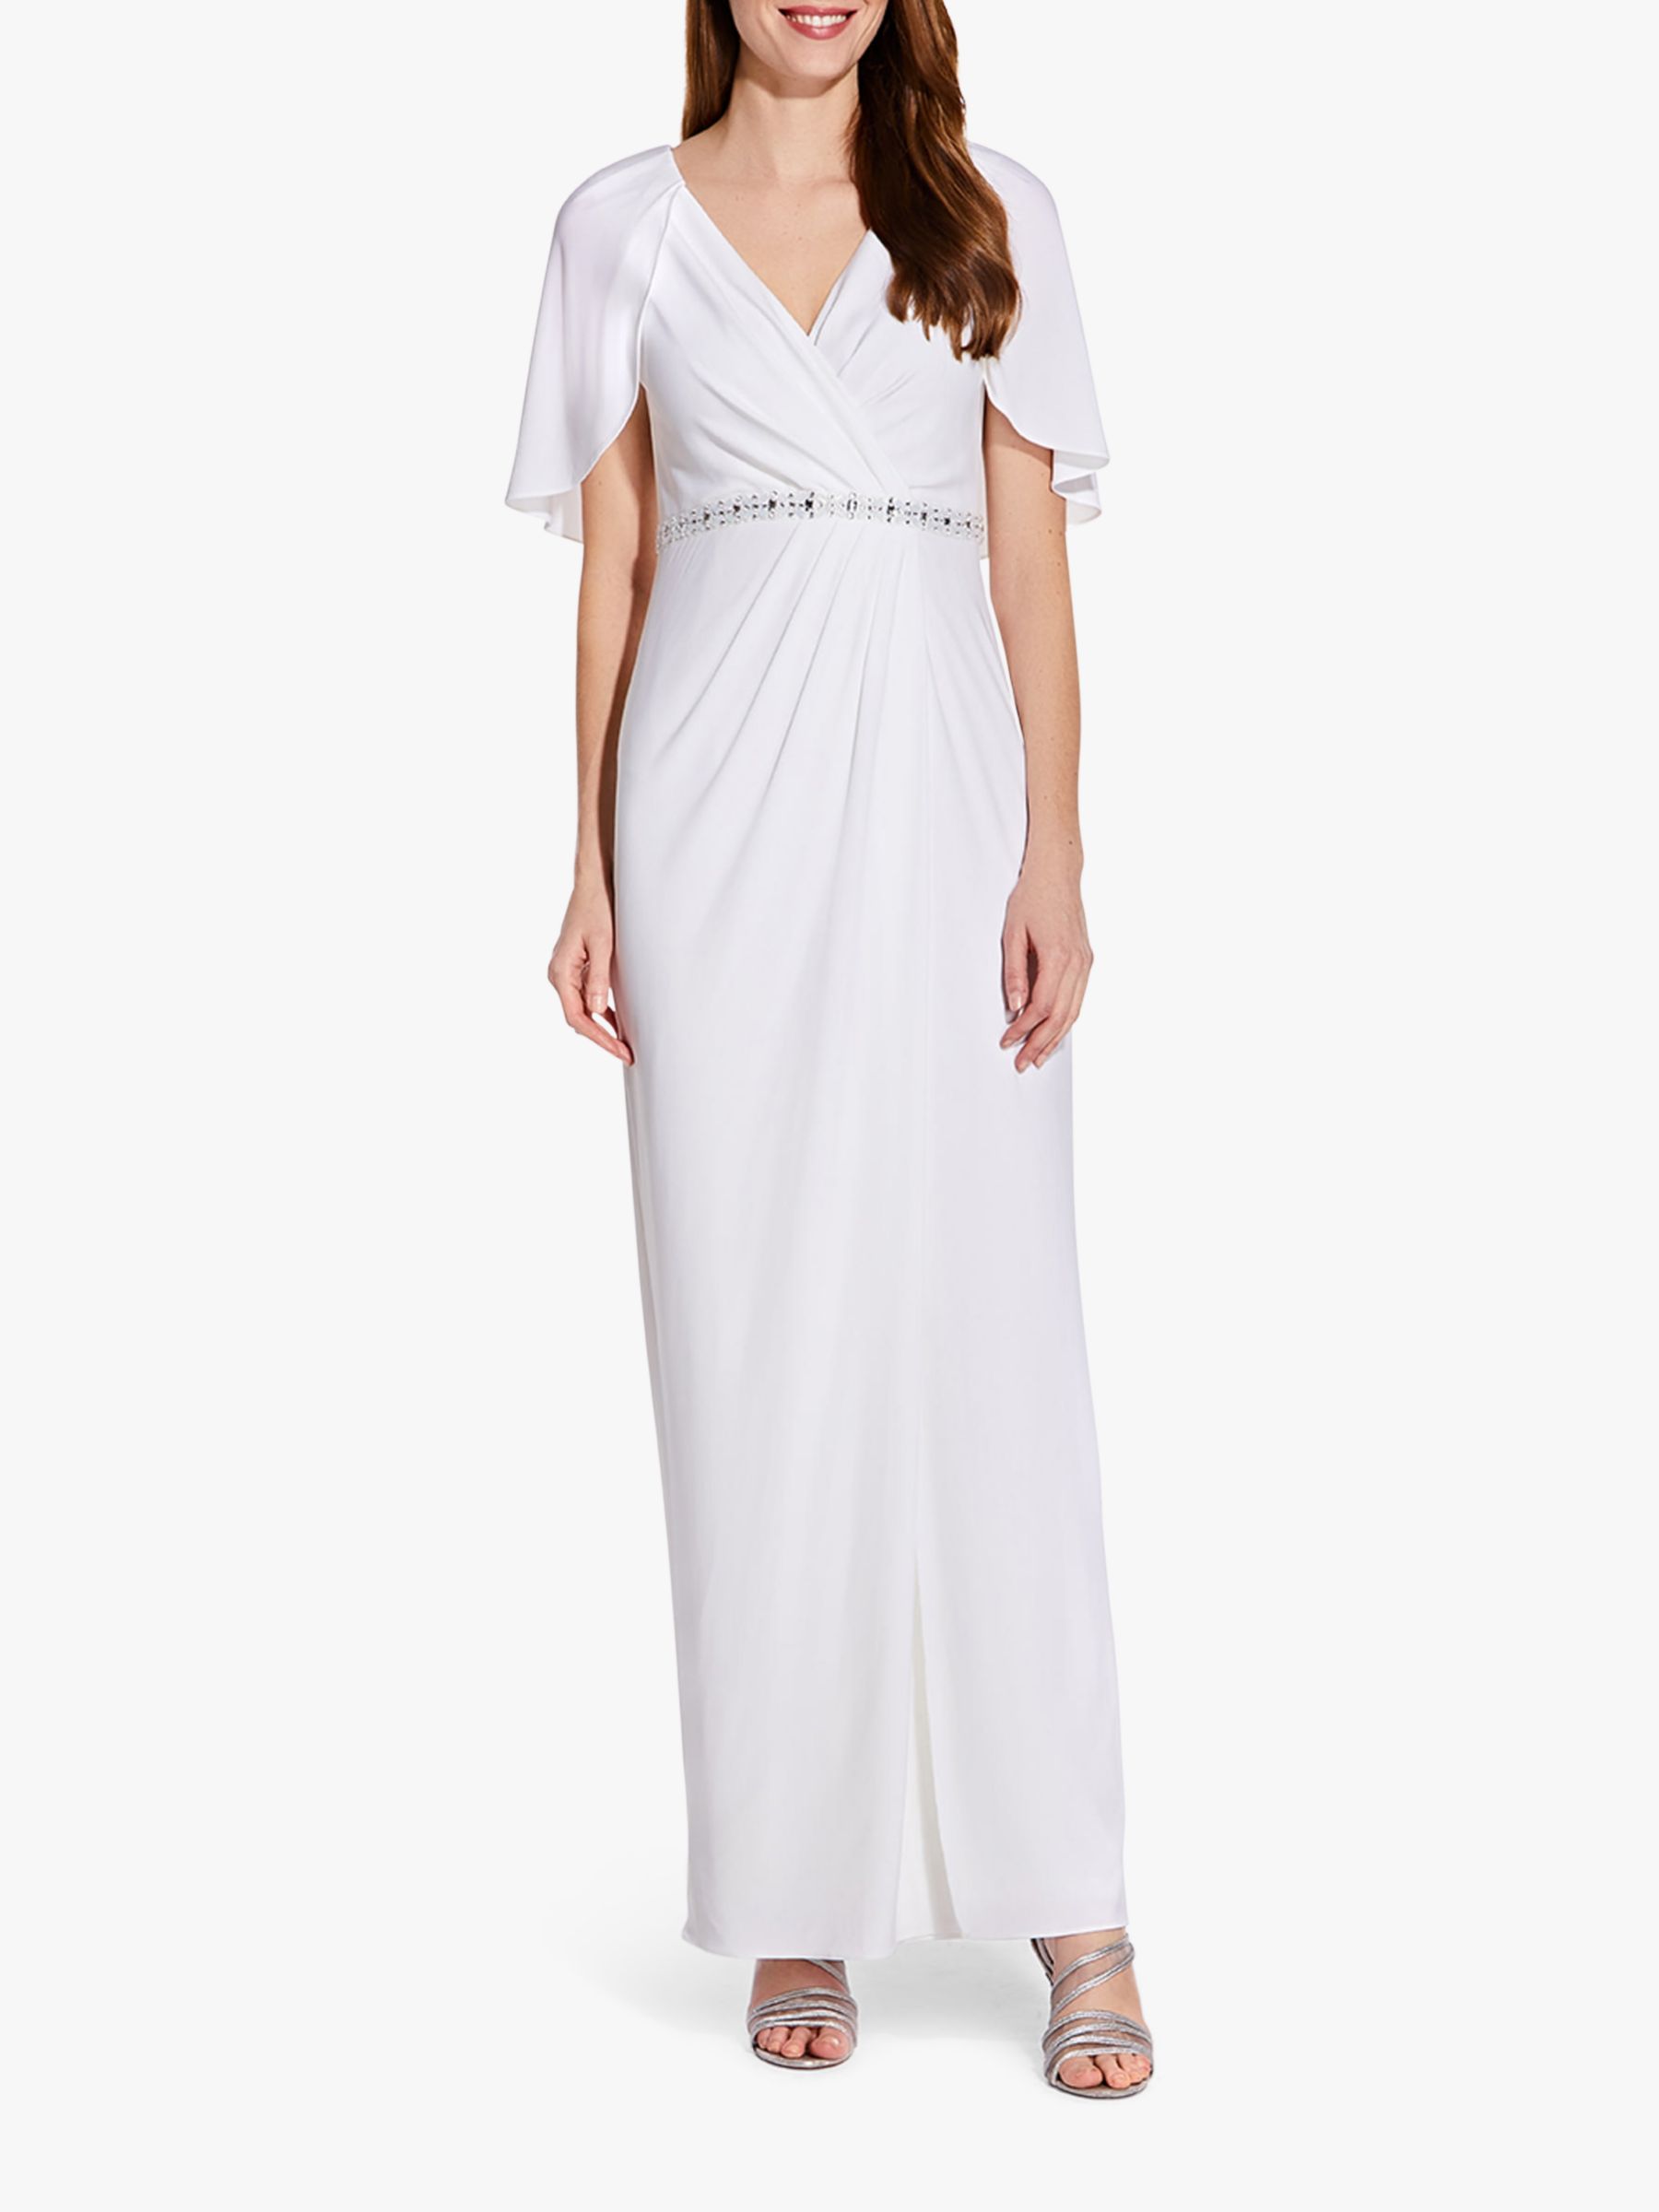 Adrianna Papell Embellished Drape Jersey Maxi Dress, Ivory